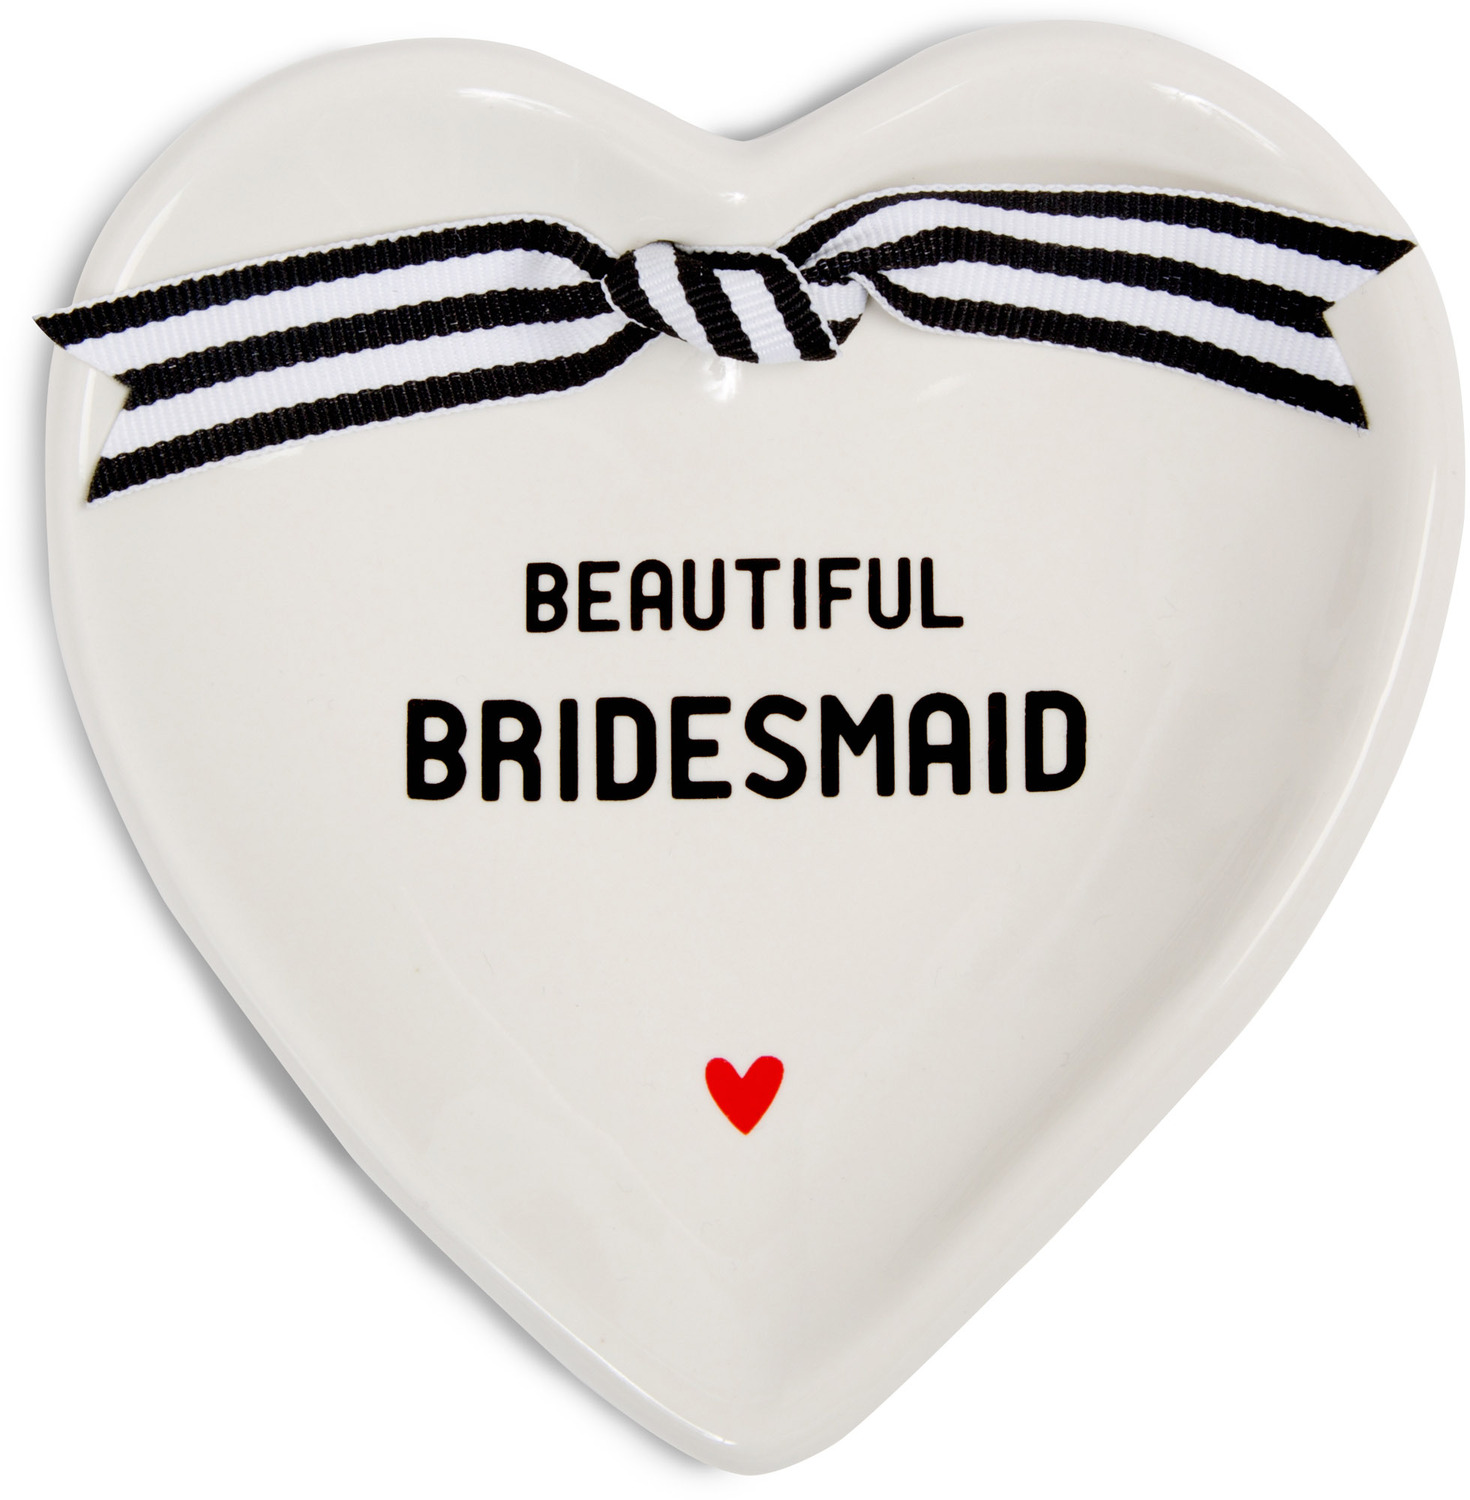 Bridesmaid by The Milestone Collection - Bridesmaid - 4.5" x 4.5" Heart-Shaped Keepsake Dish